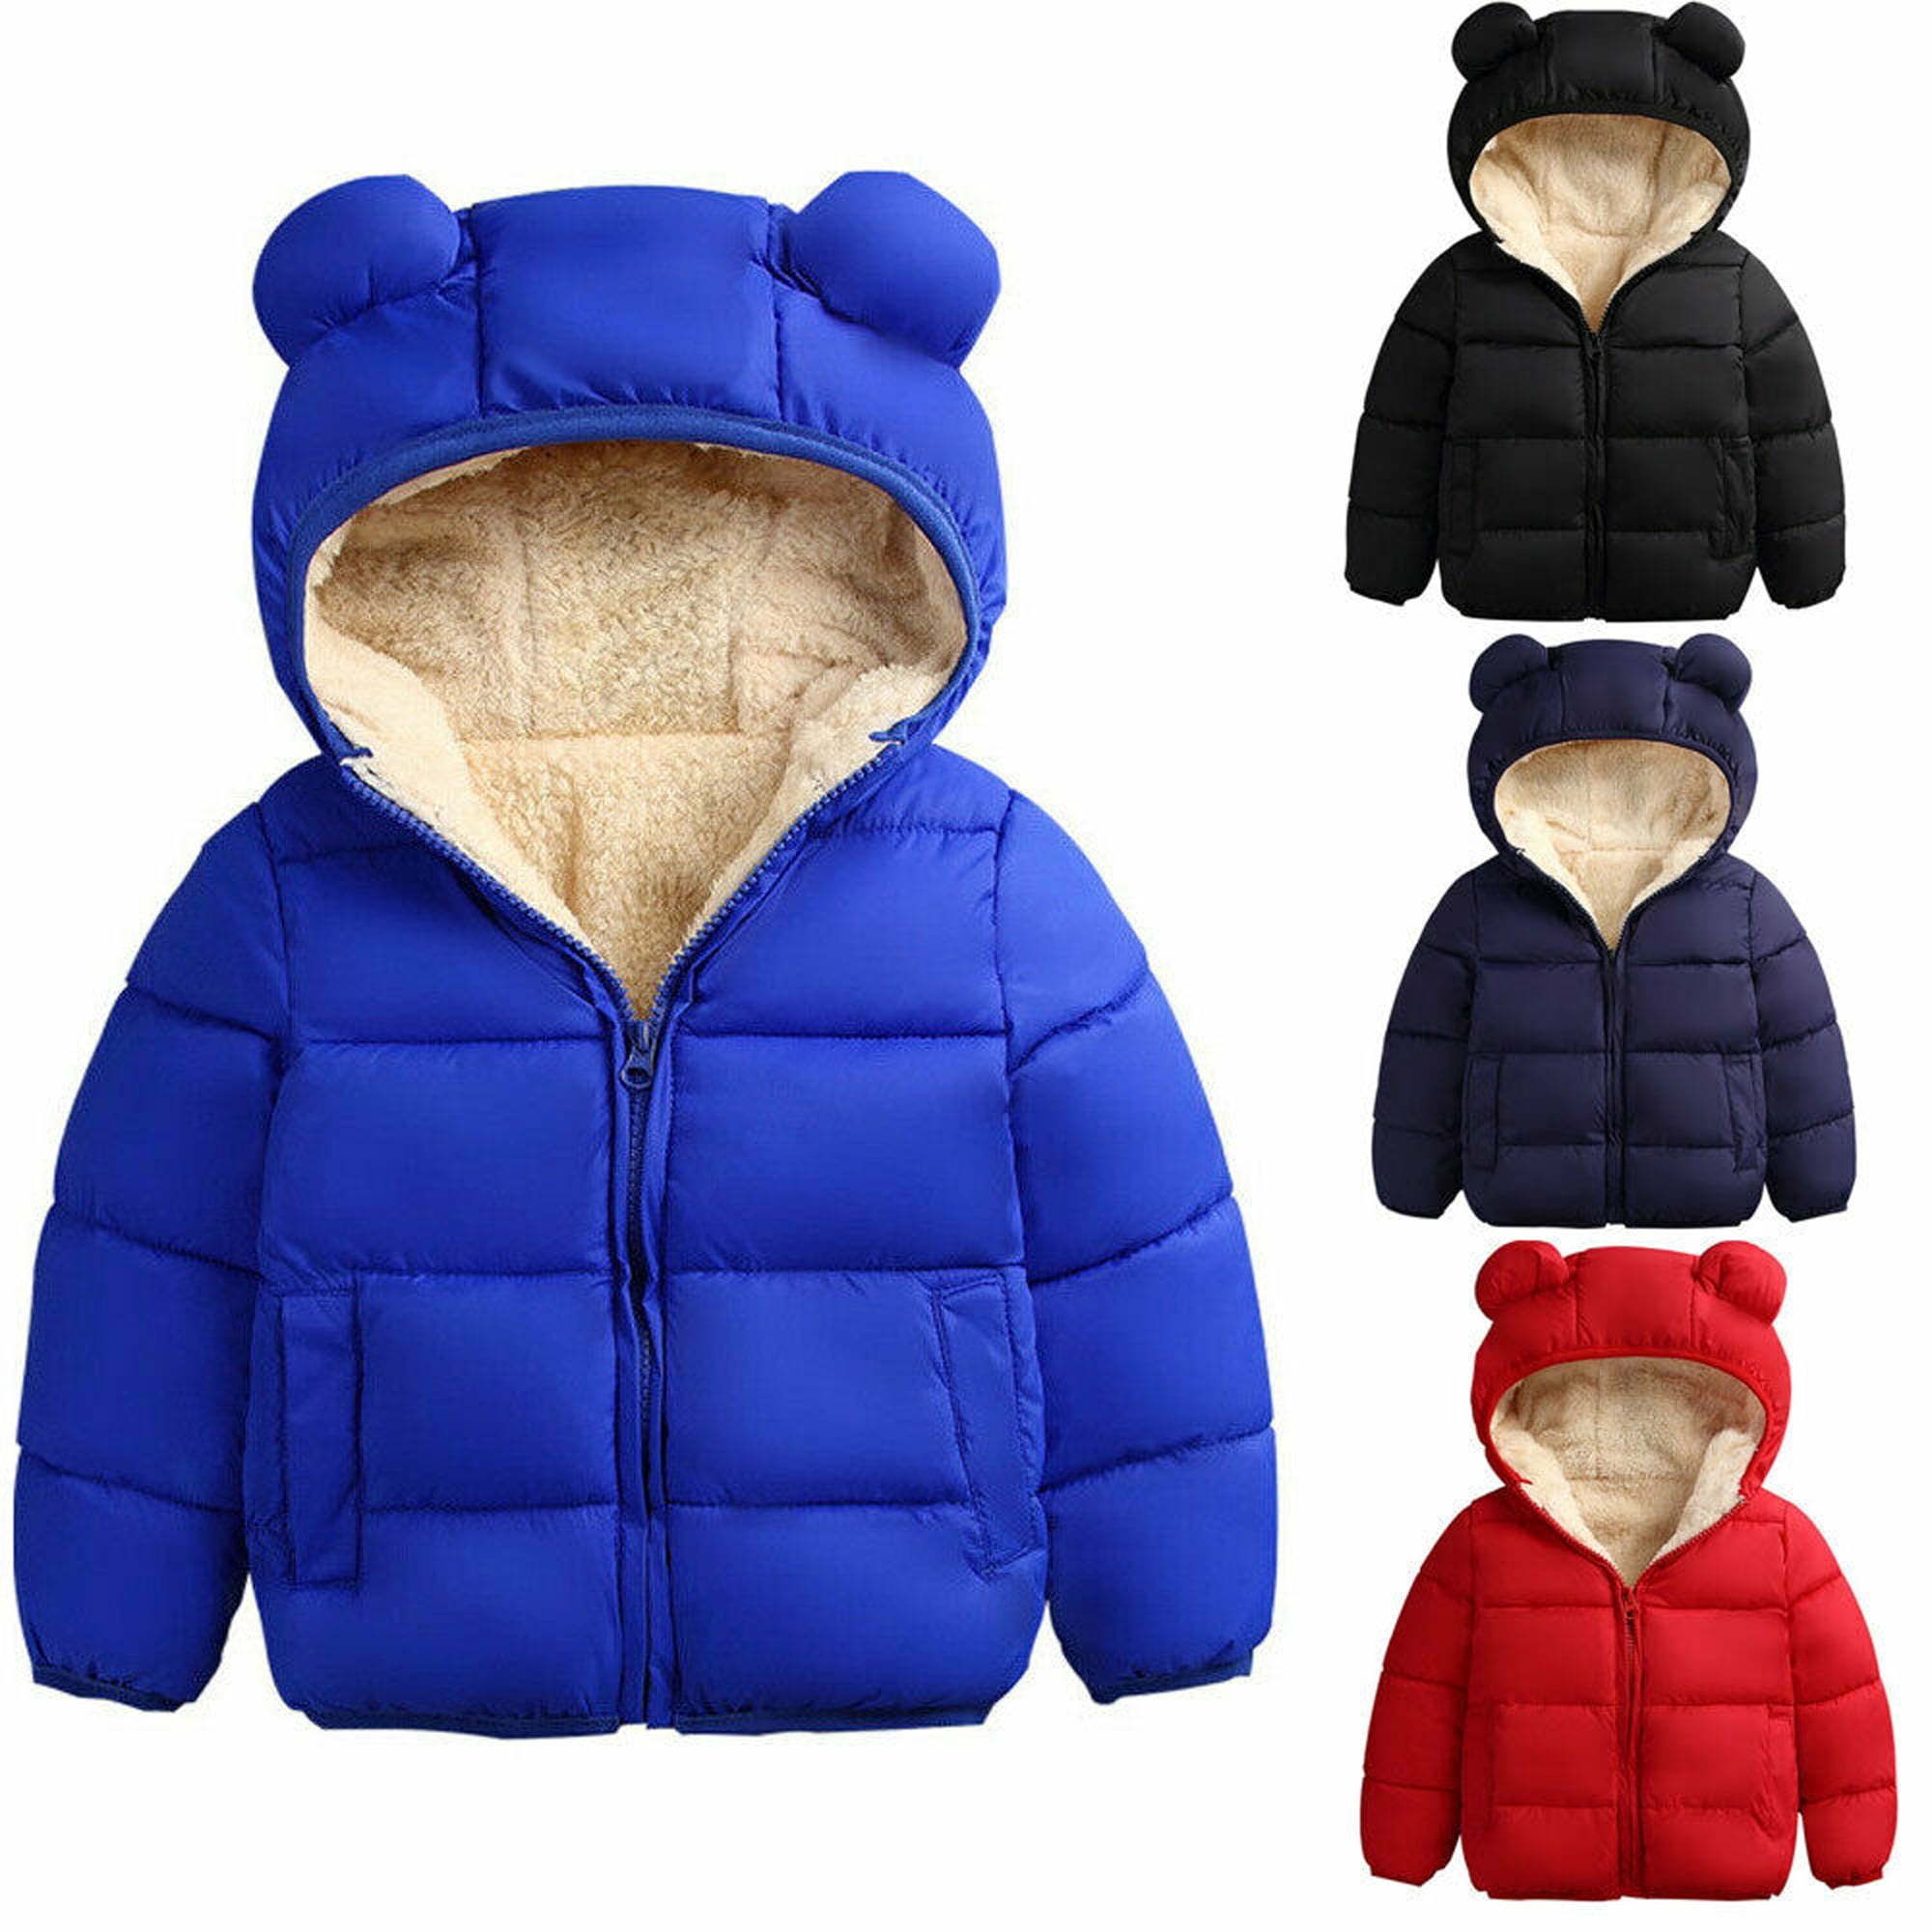 Baby Kids Girls Boys Hooded Ear Coats Winter Warm Outerwear Jacket Clothes 